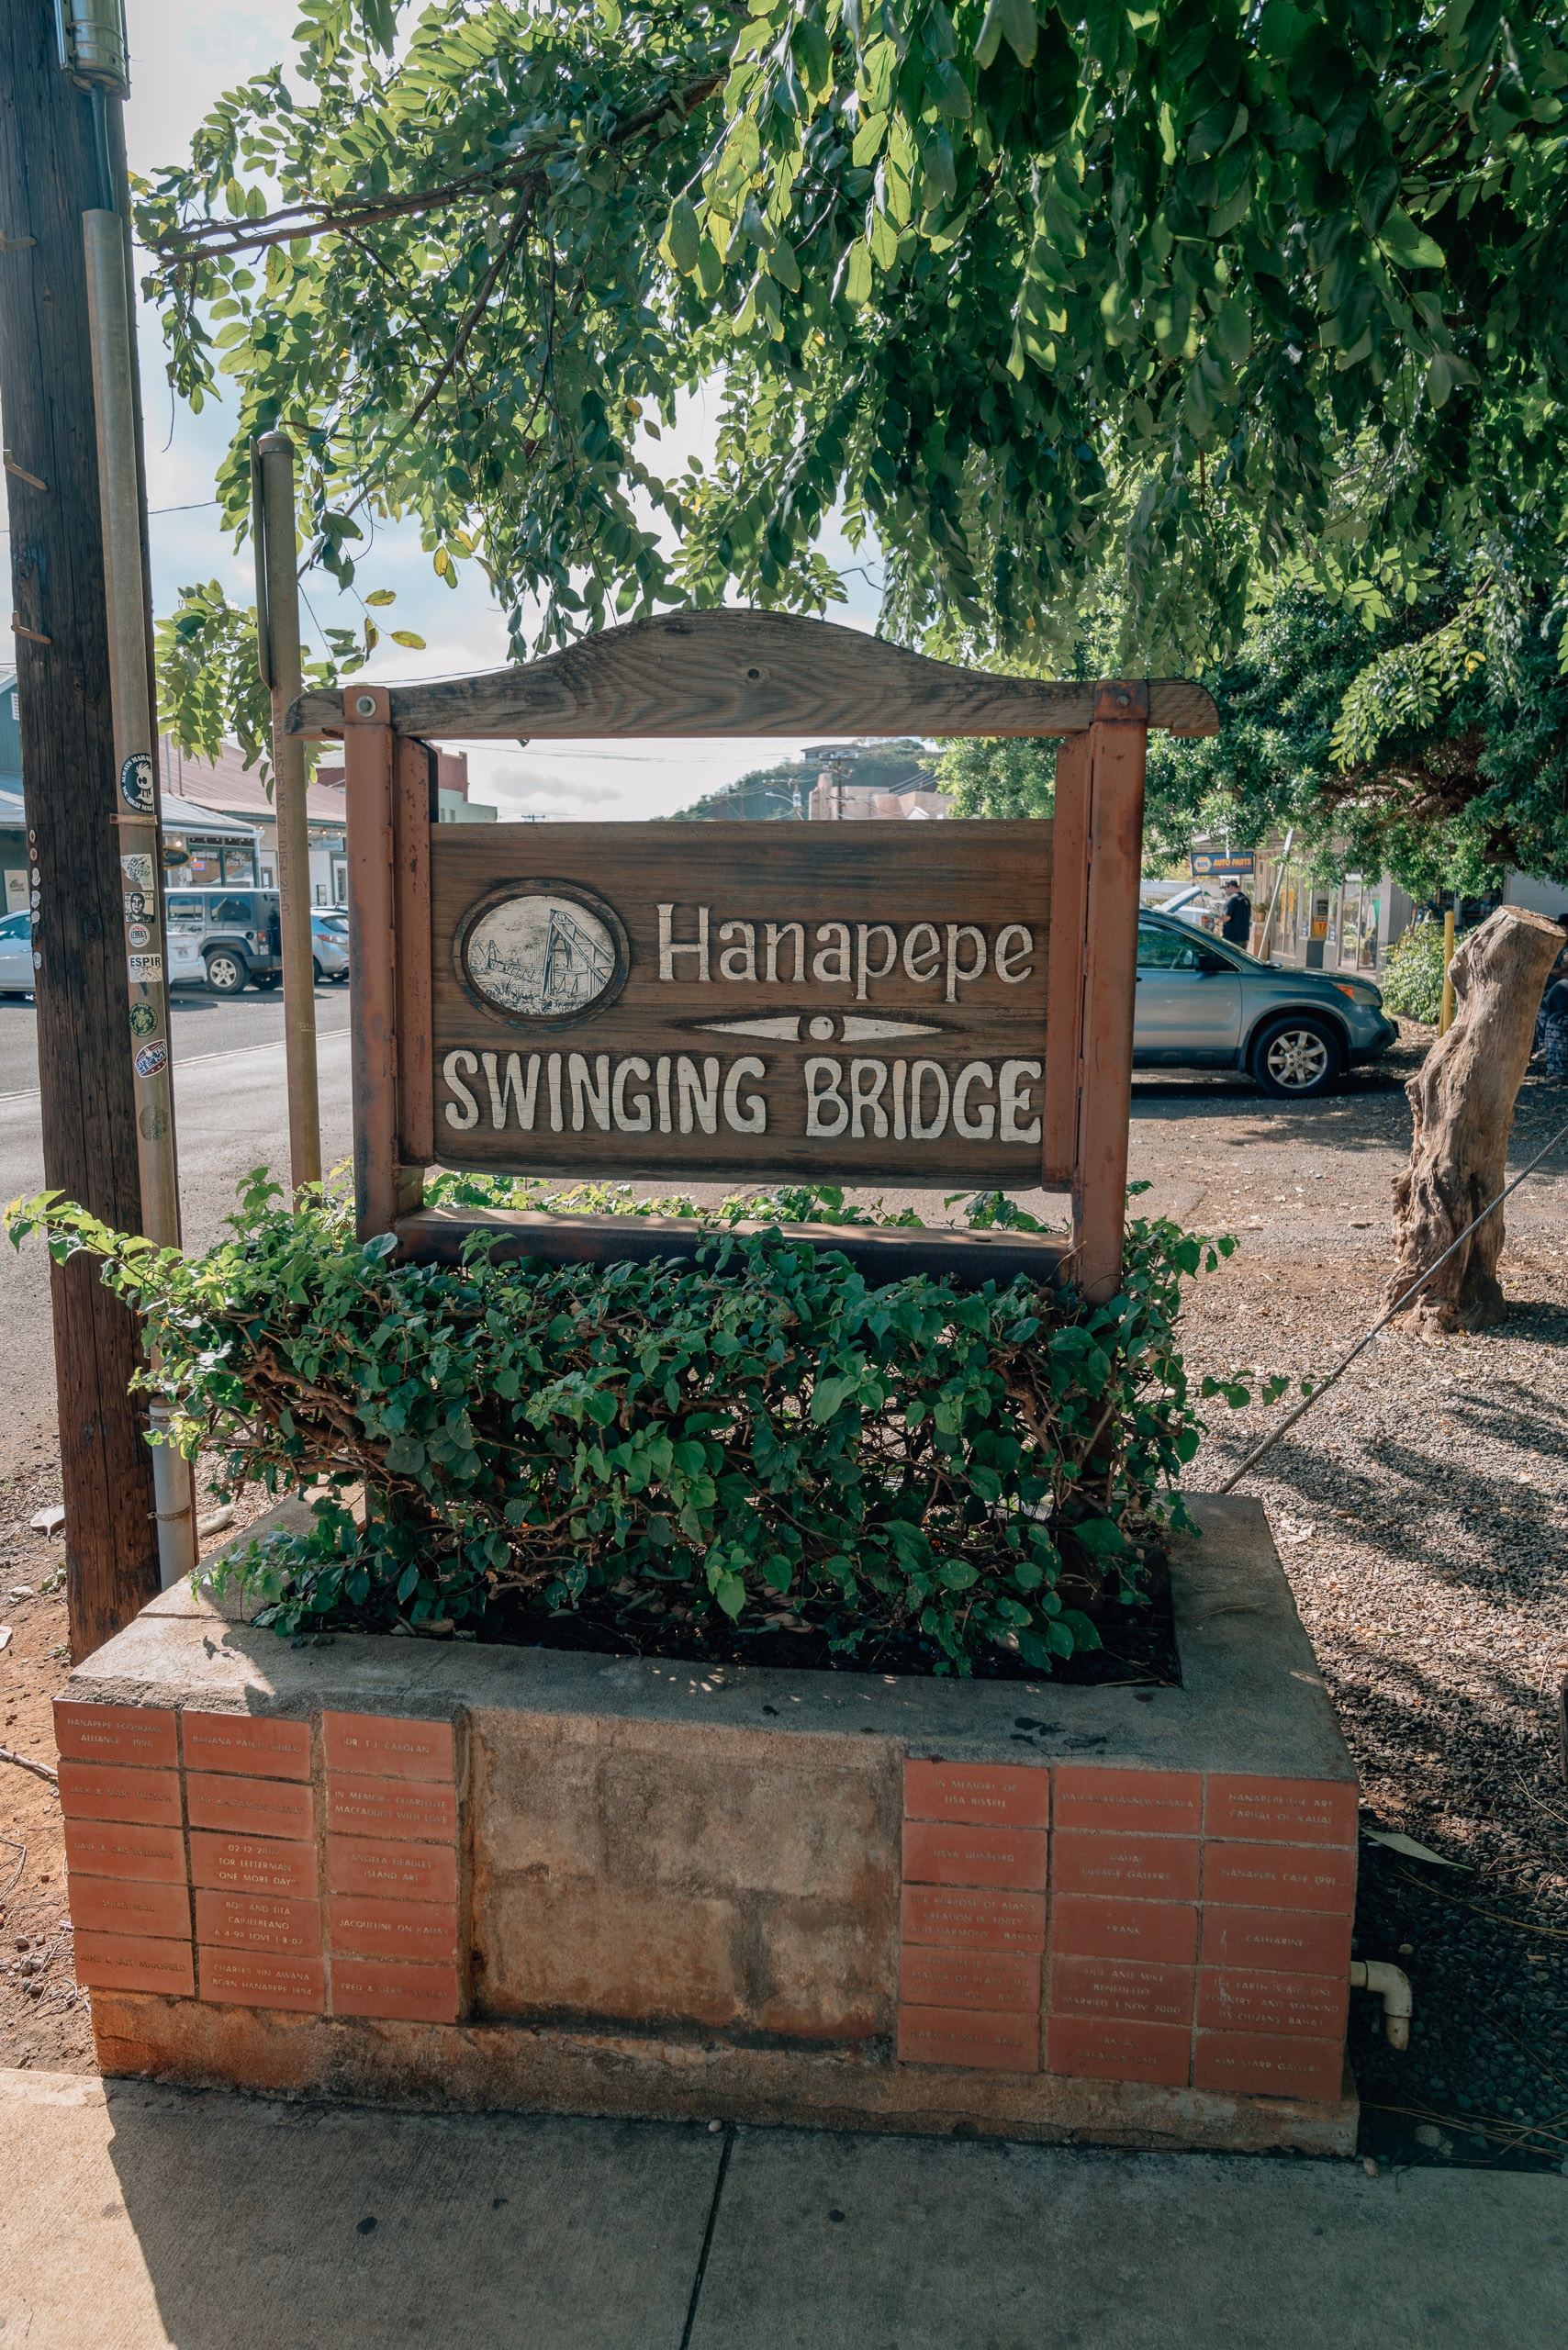 Welcome to the Hanapepe Swinging Bridge